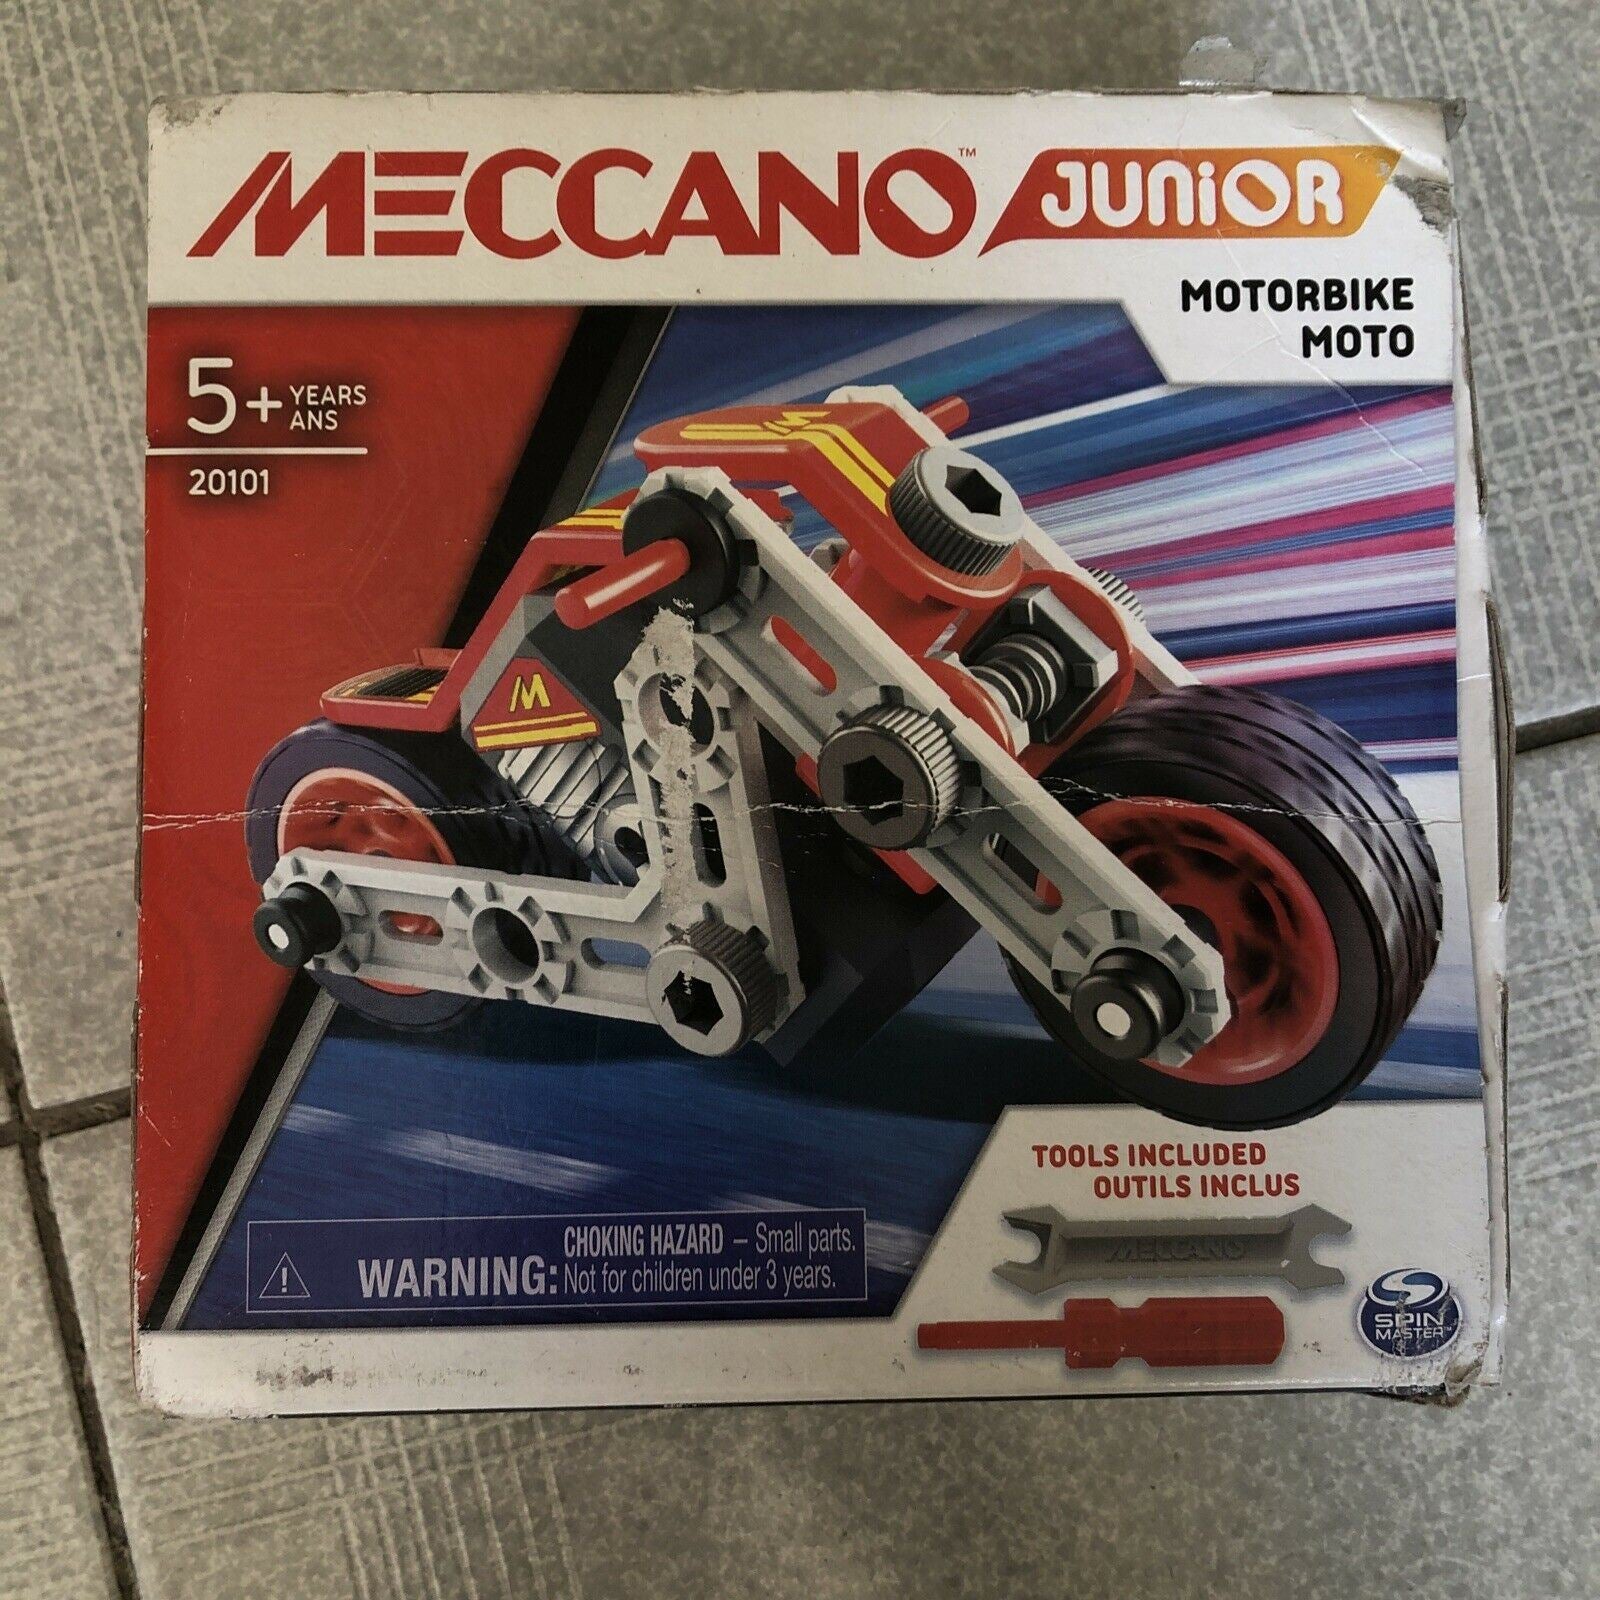 Meccano Junior Motorbike Moto Building Kit